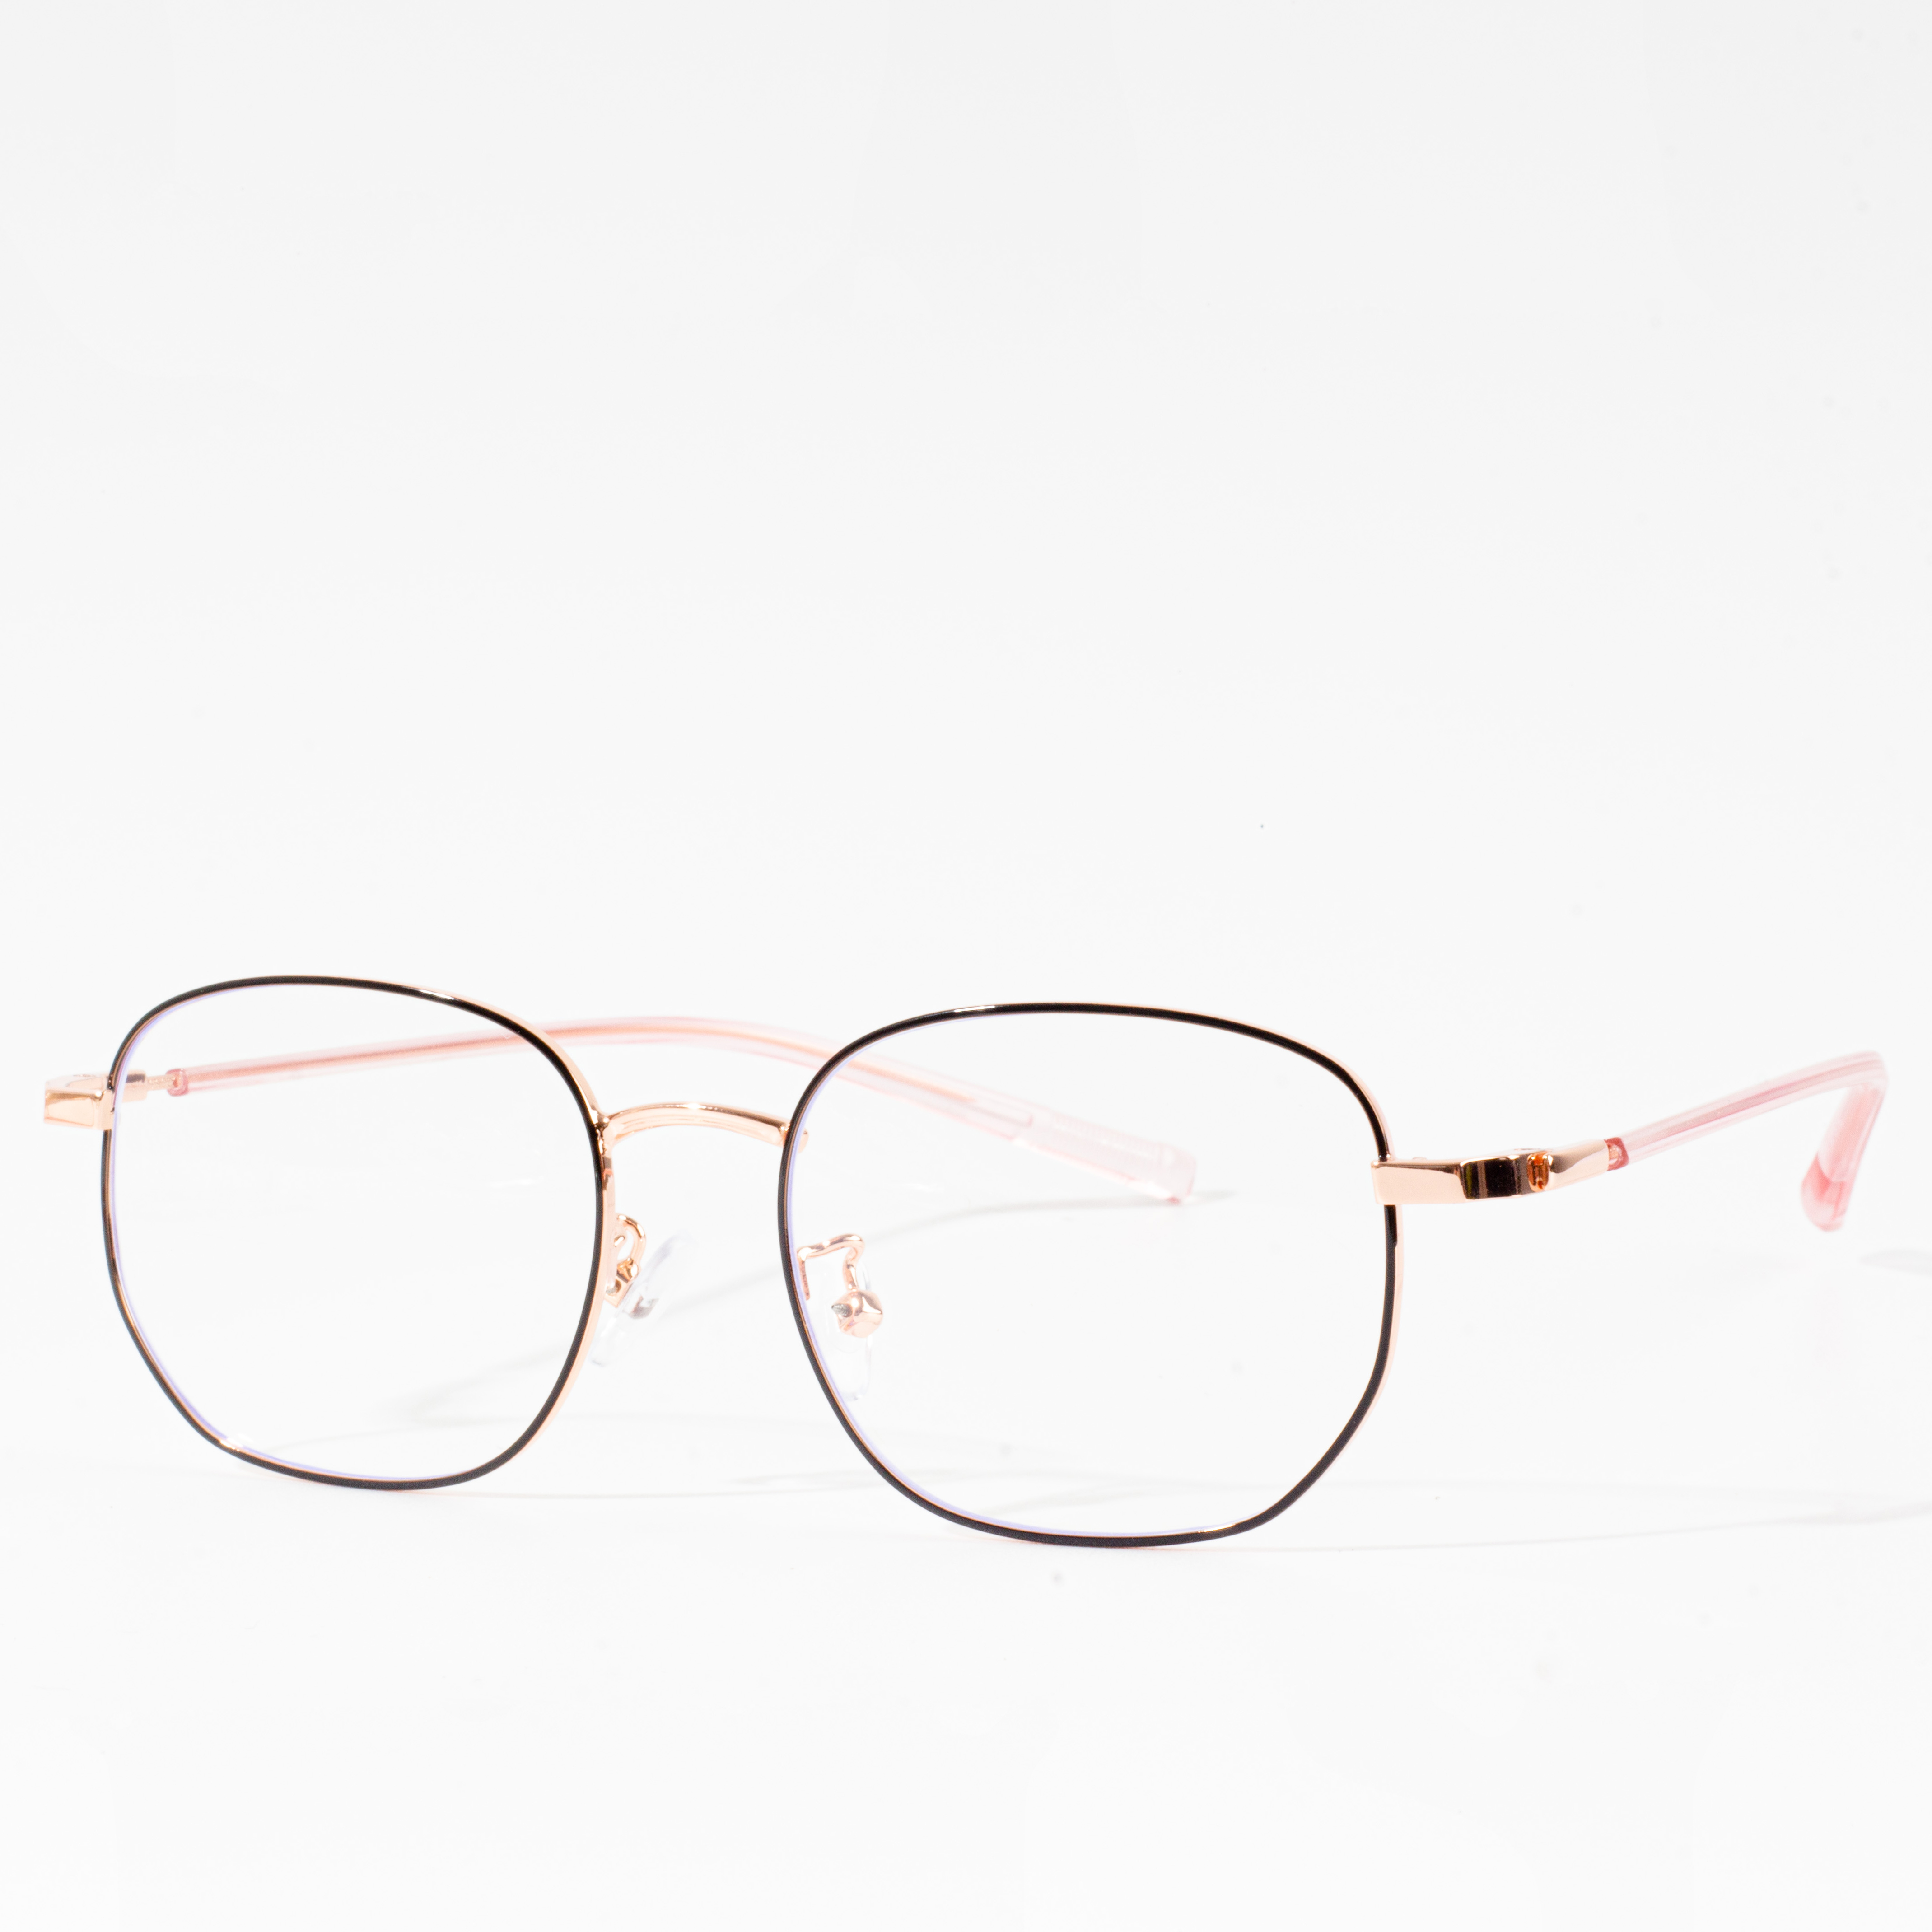 soarten brillen frames